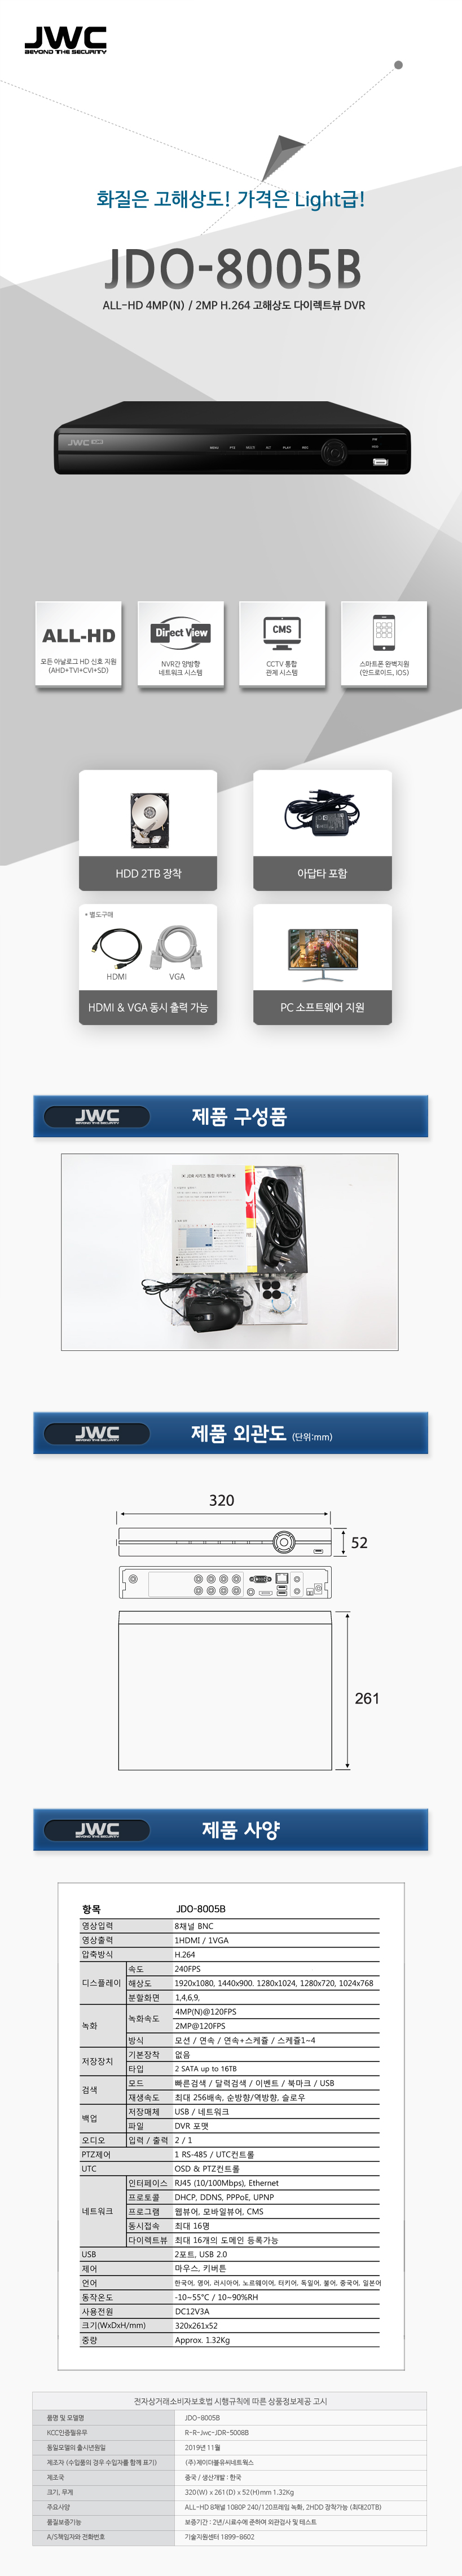 JDO-8005B-2TB_.jpg